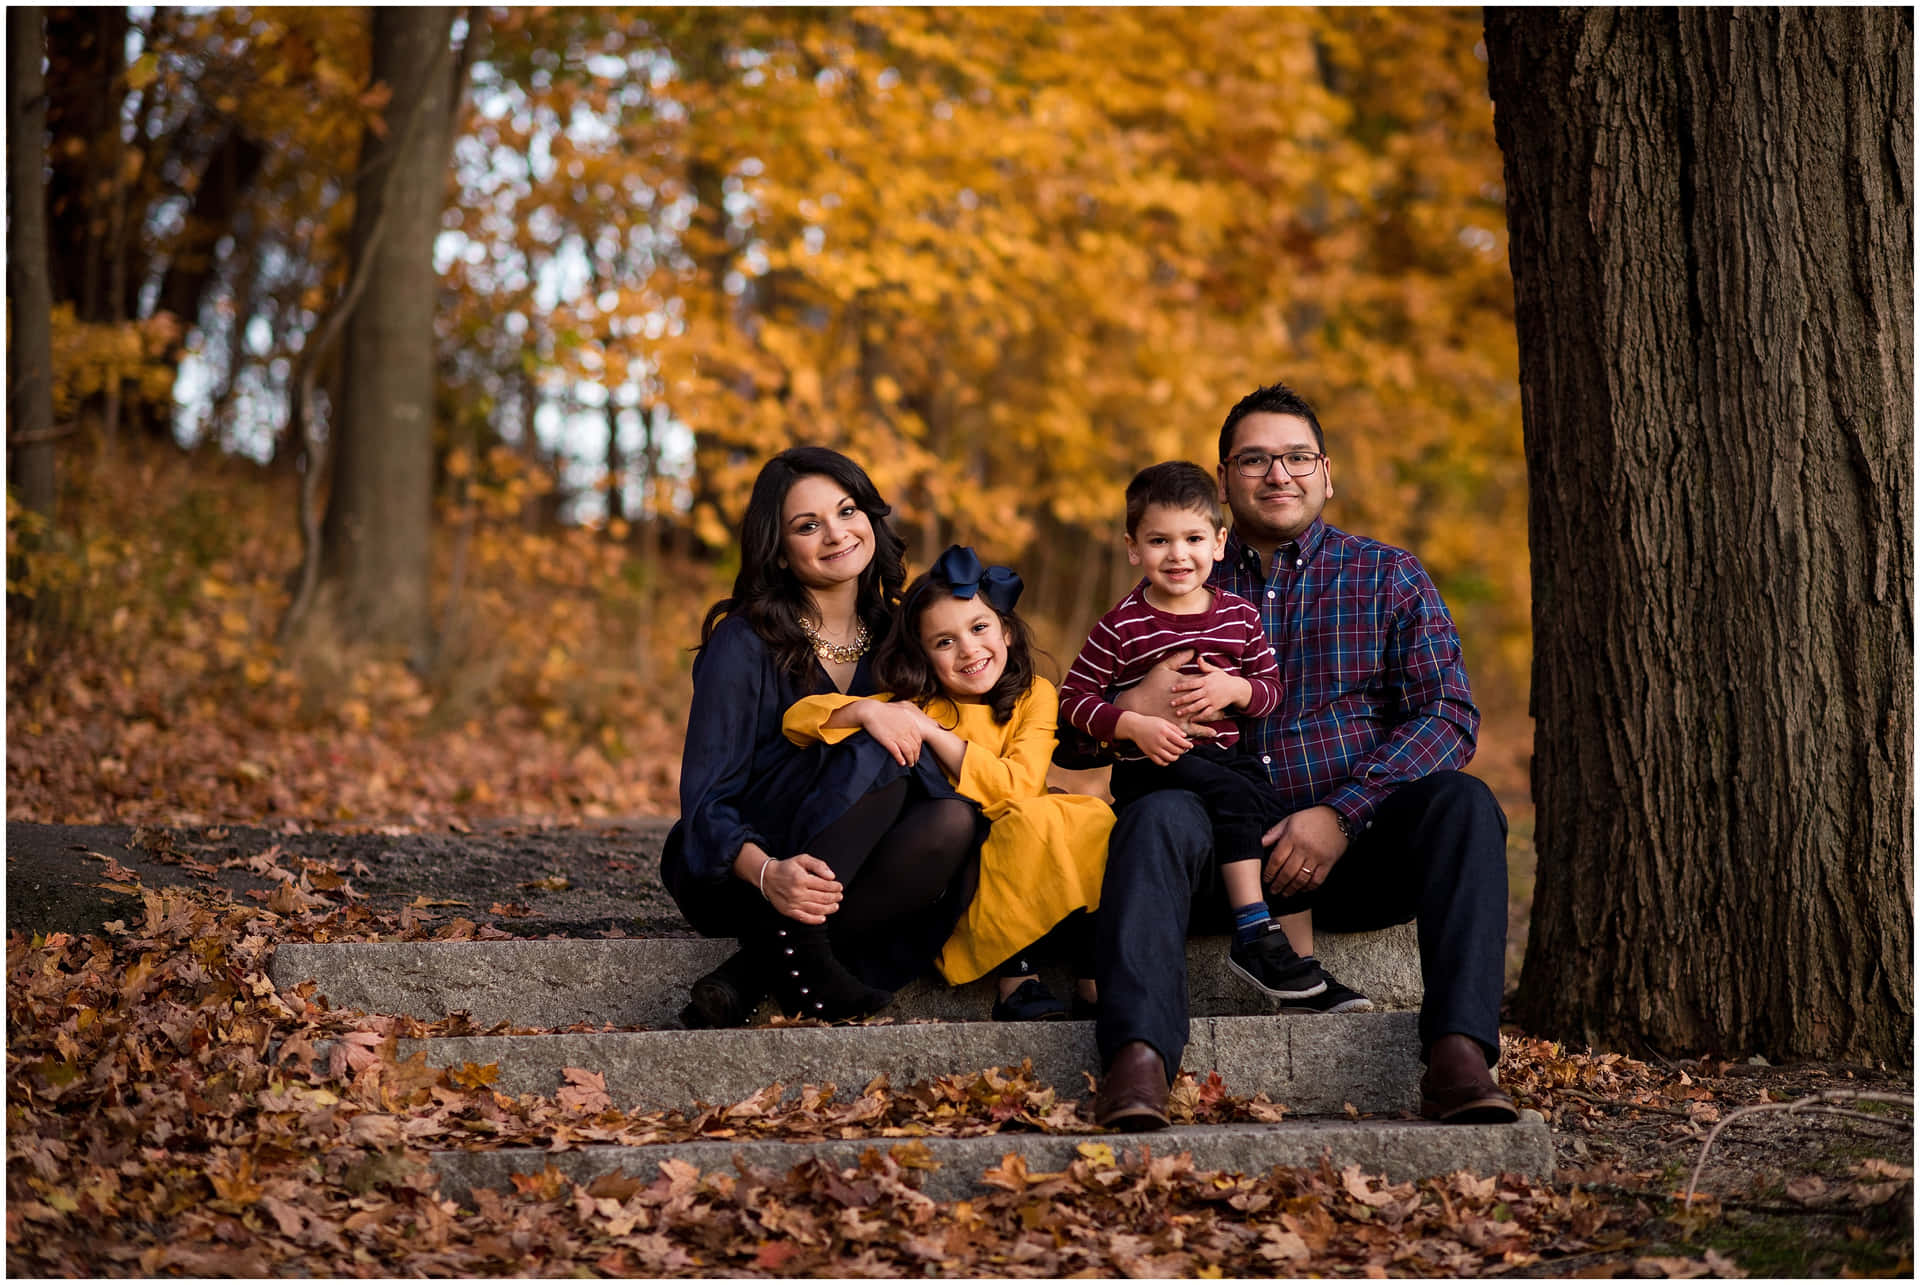 Fall Family - Celebrating the Season